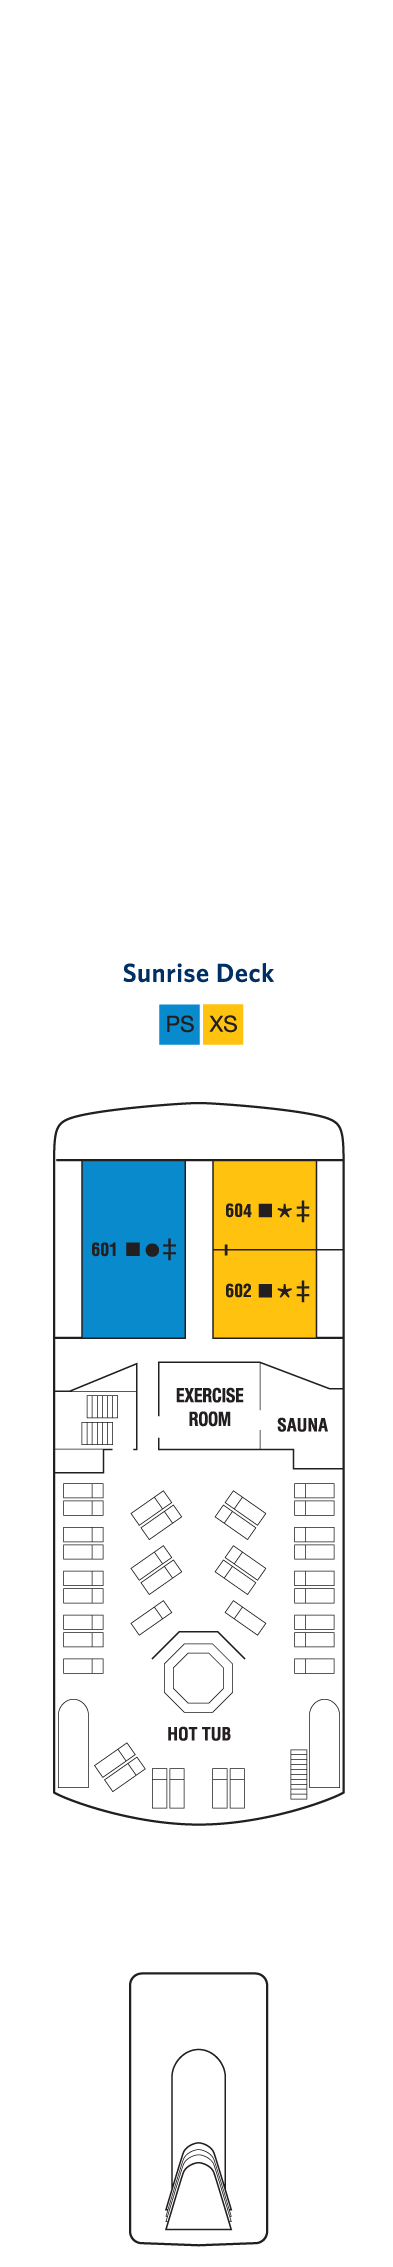 Sunrise Deck Deck Plan